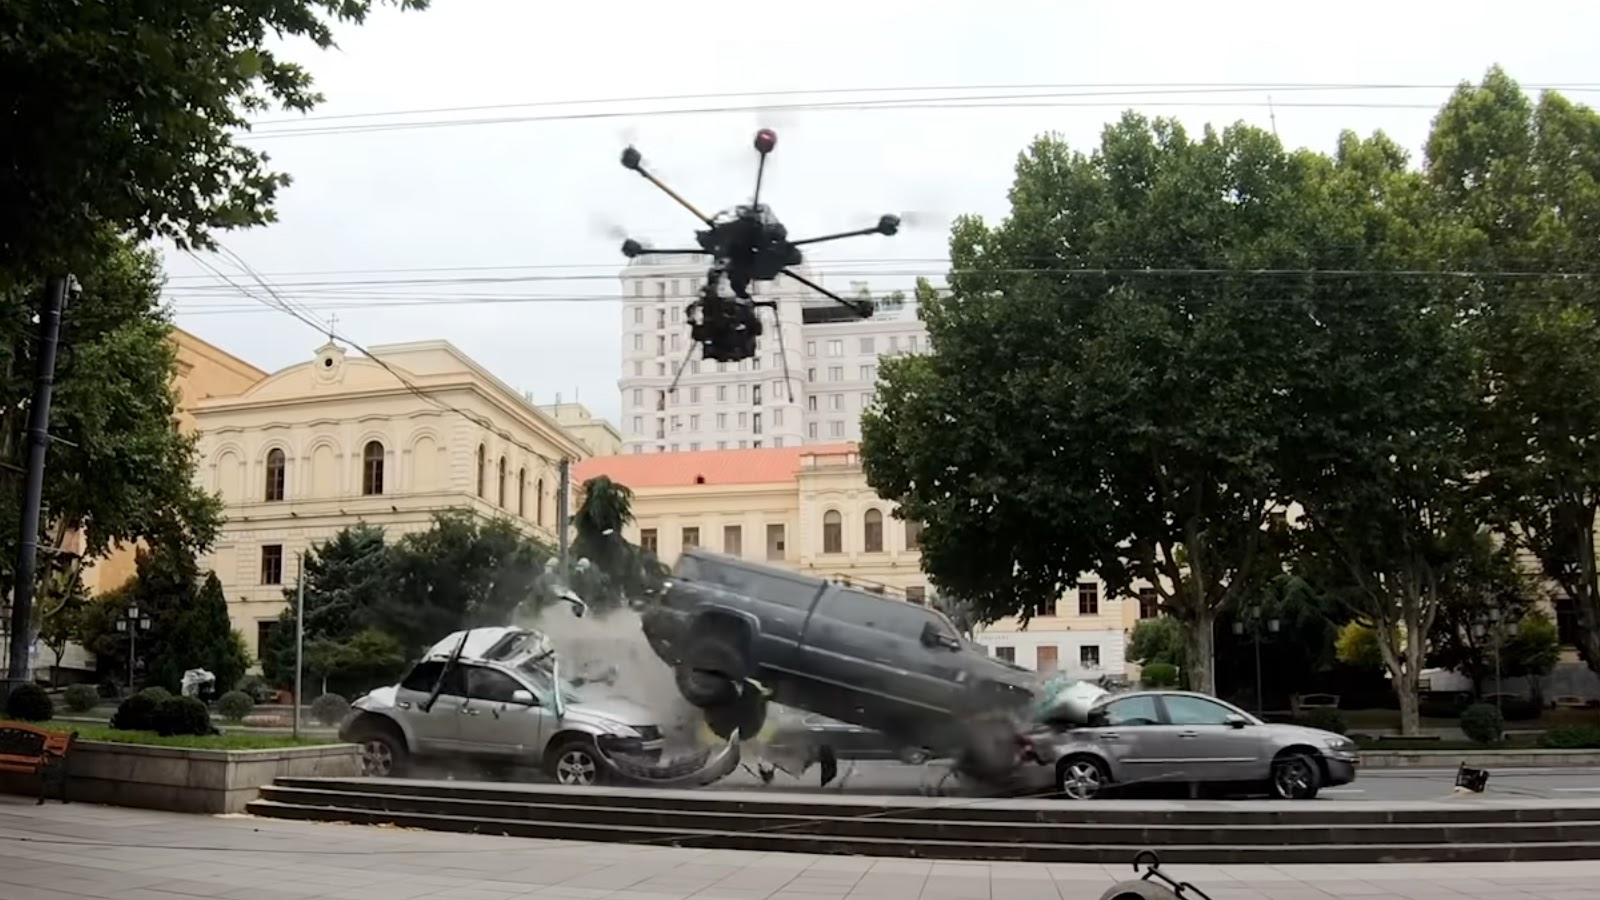 Hexacopter camera platform capturing the action